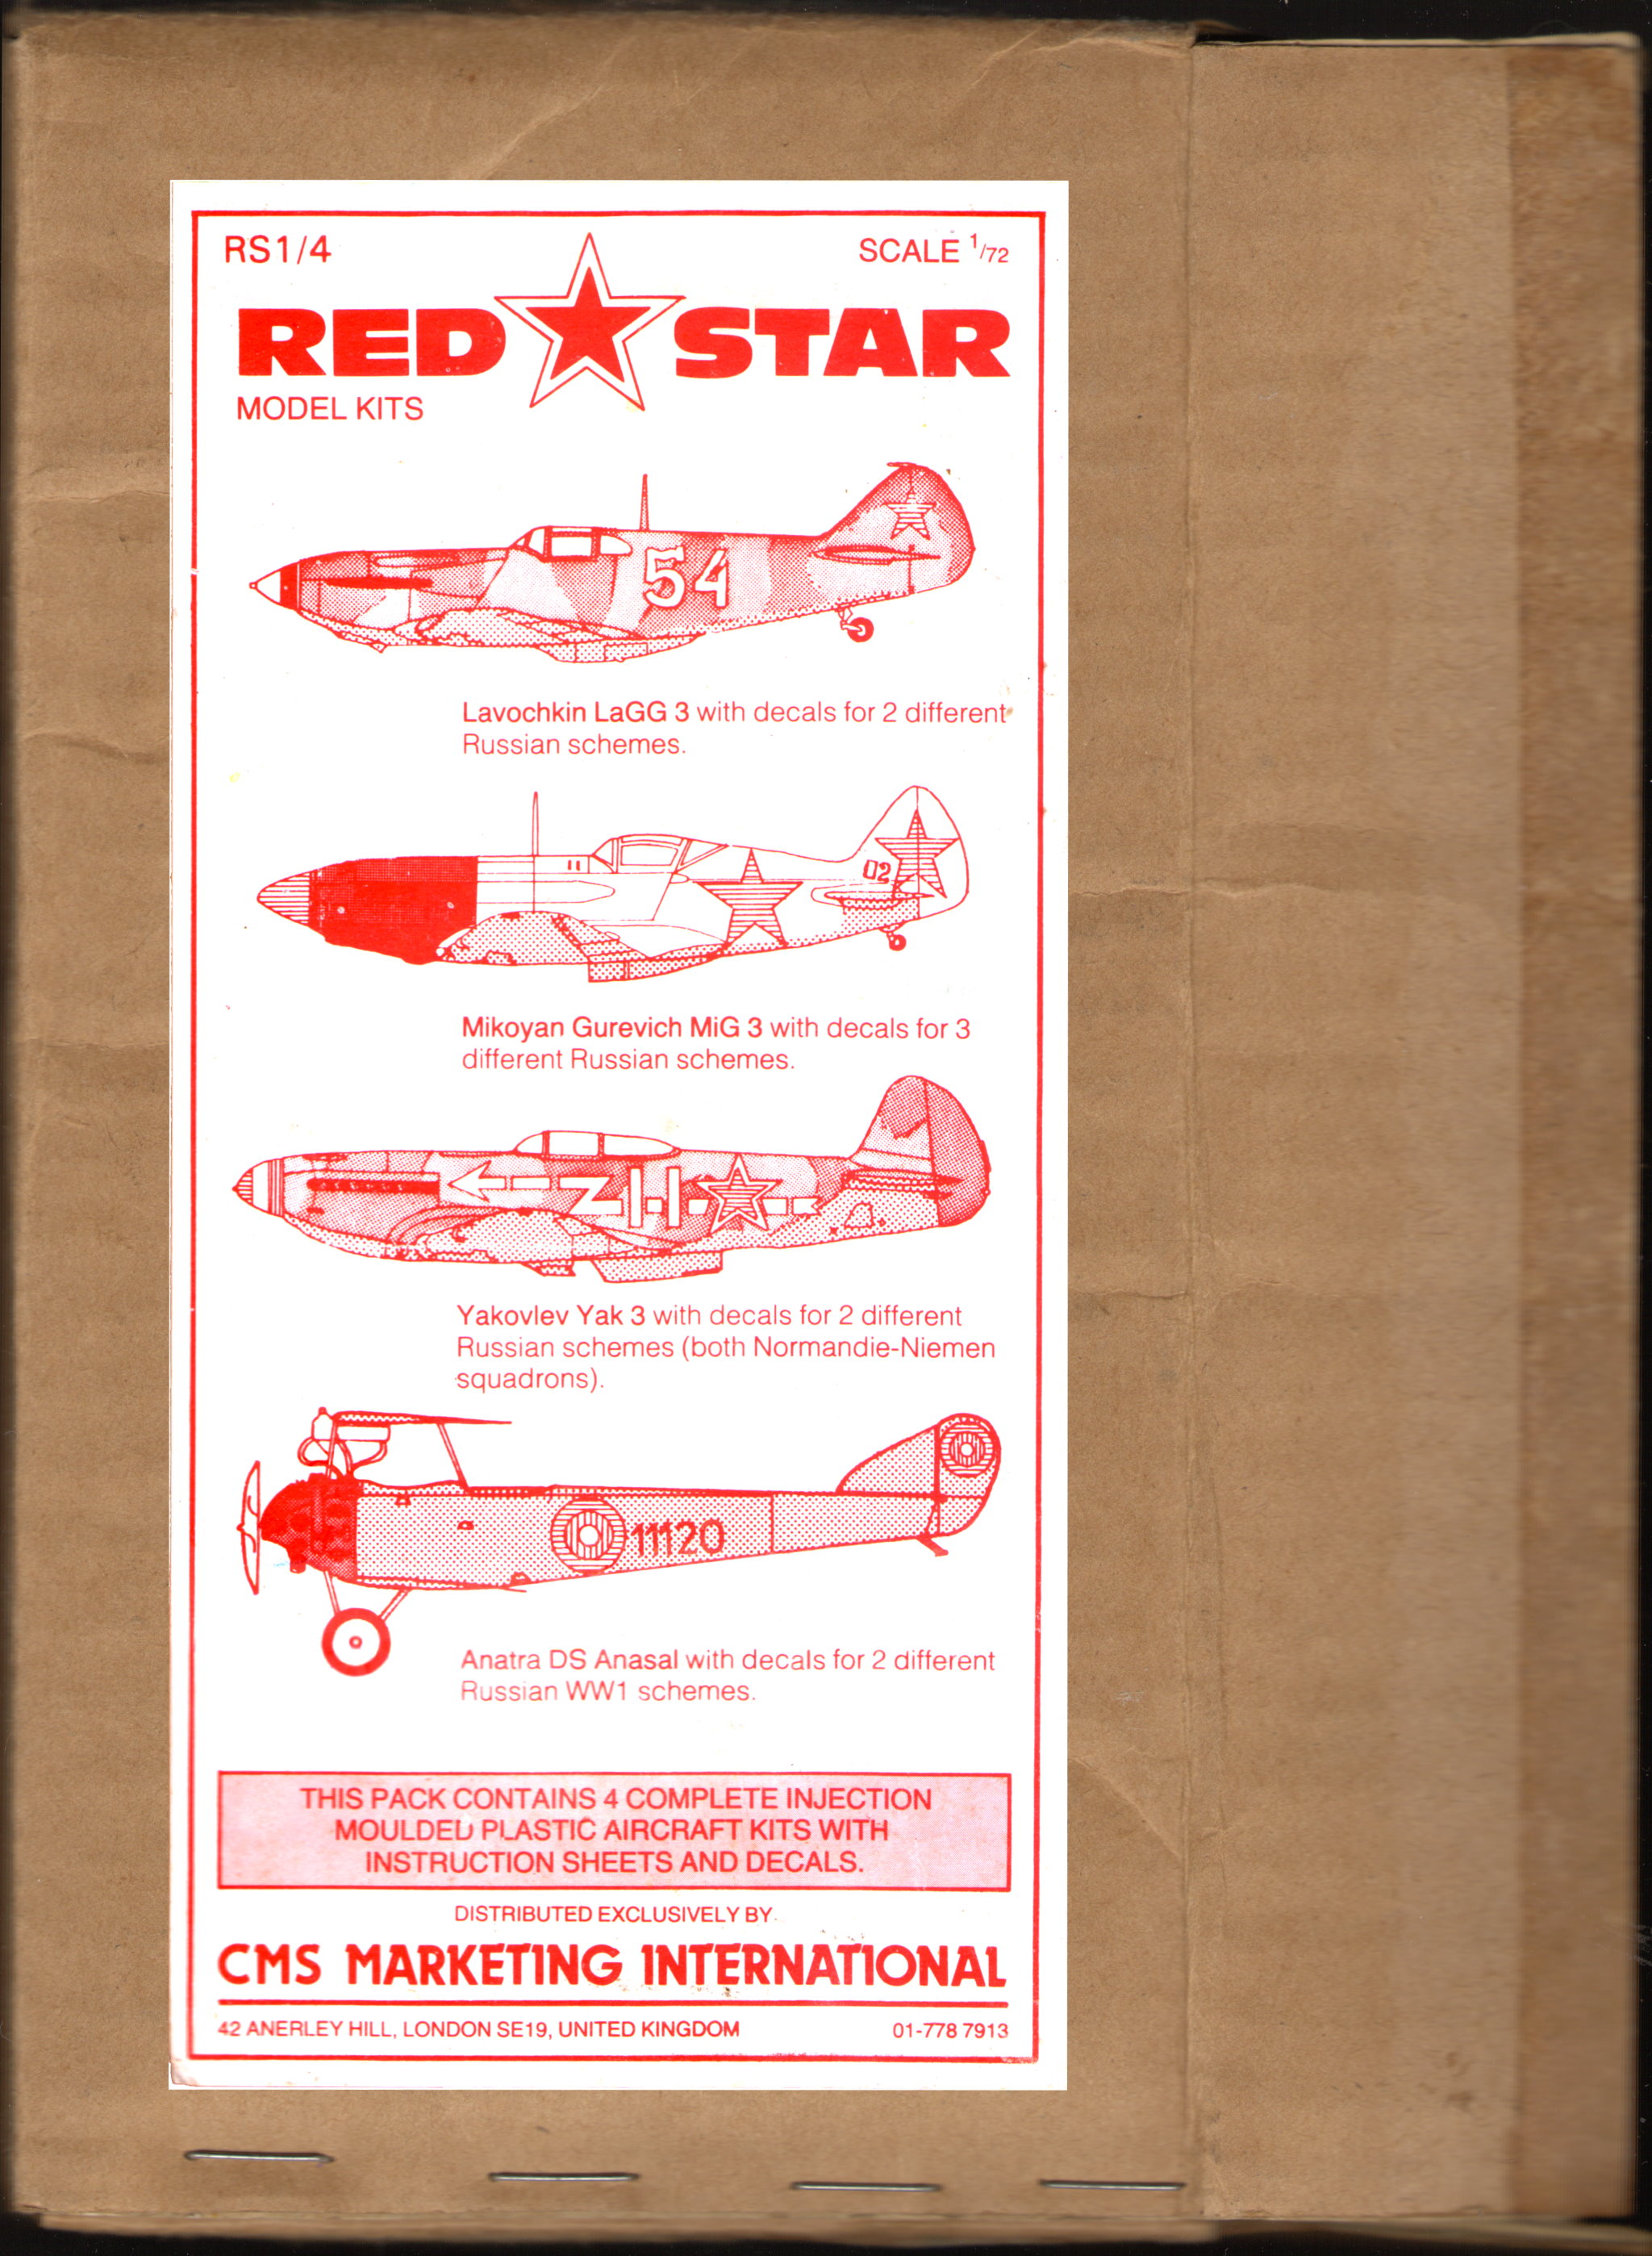 Red Star RS1/4 Anatra Anasal DS, Red Star Model Kits Ltd, 1983/4  Four kits pack box